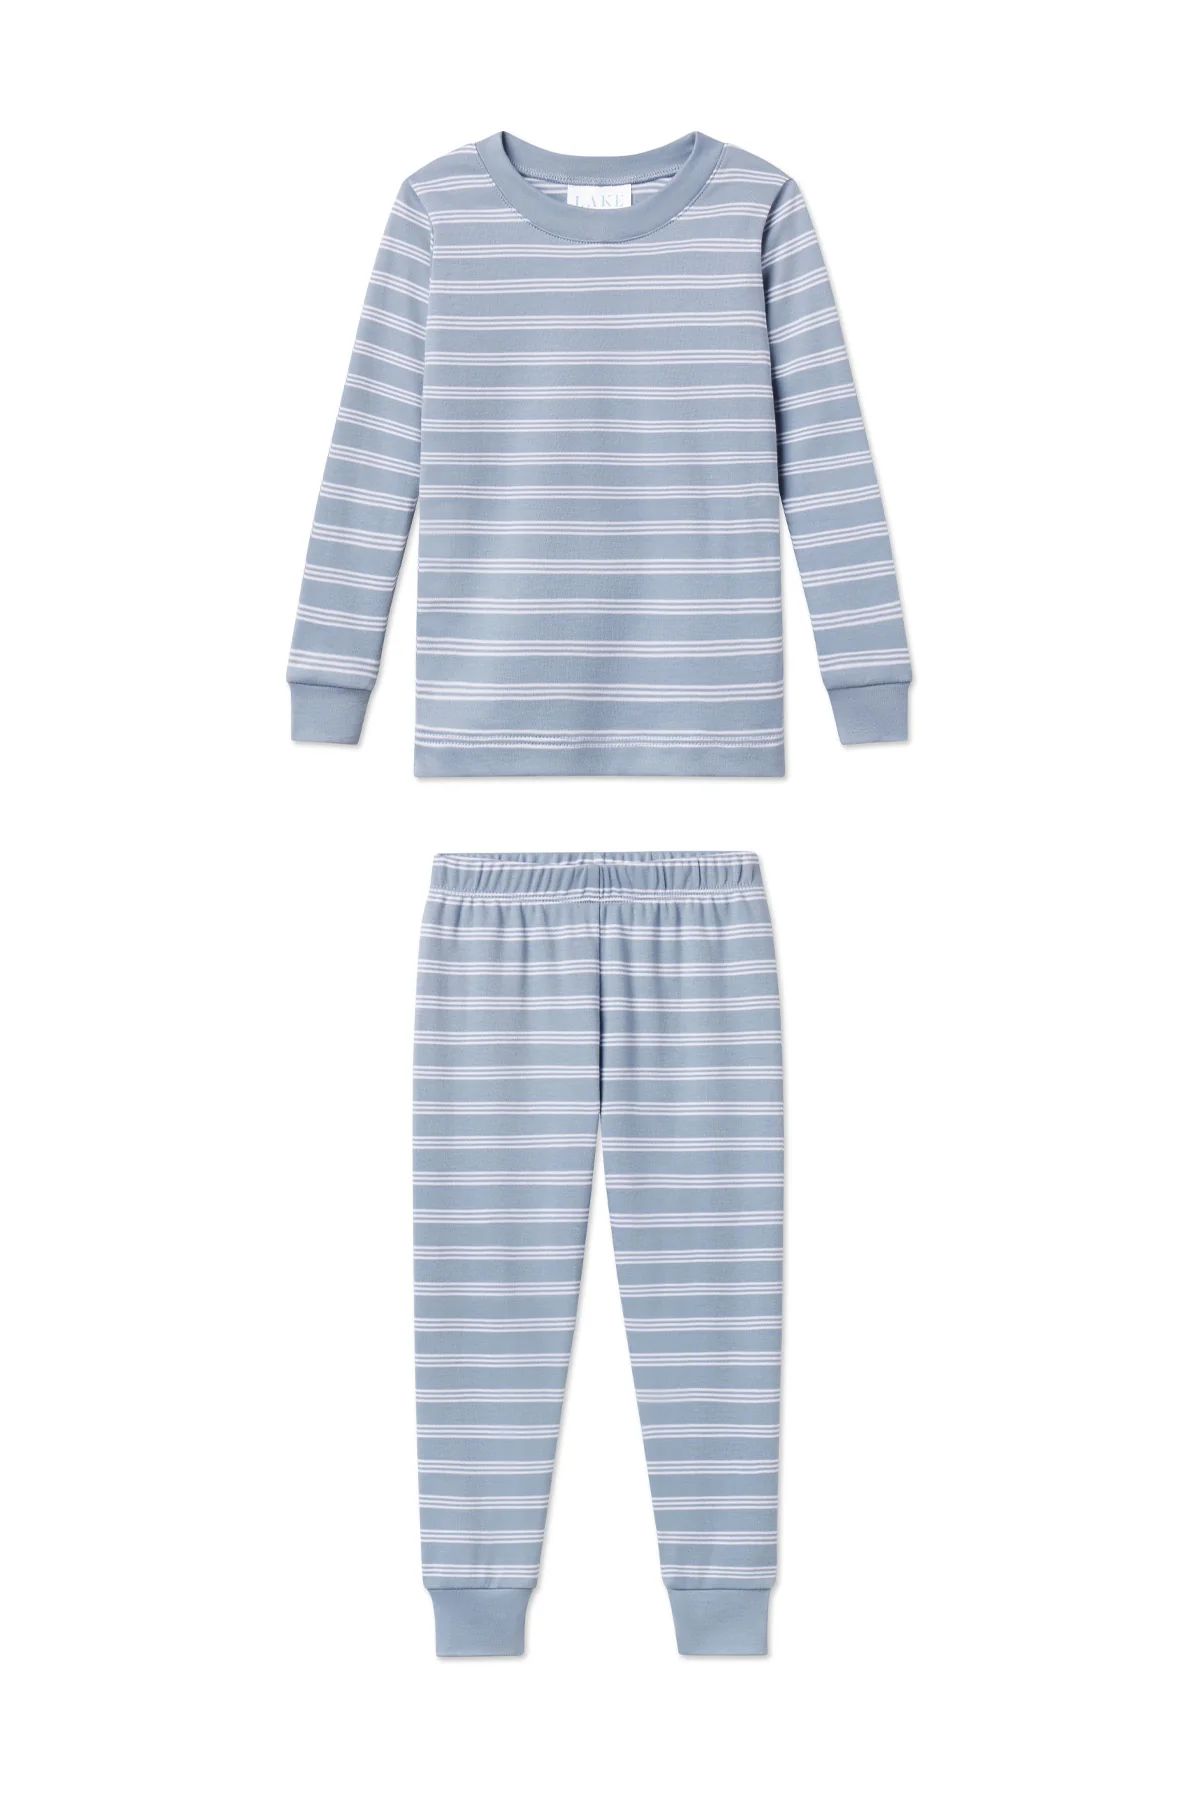 Kids Long-Long Set in Dusty Blue Stripe | Lake Pajamas